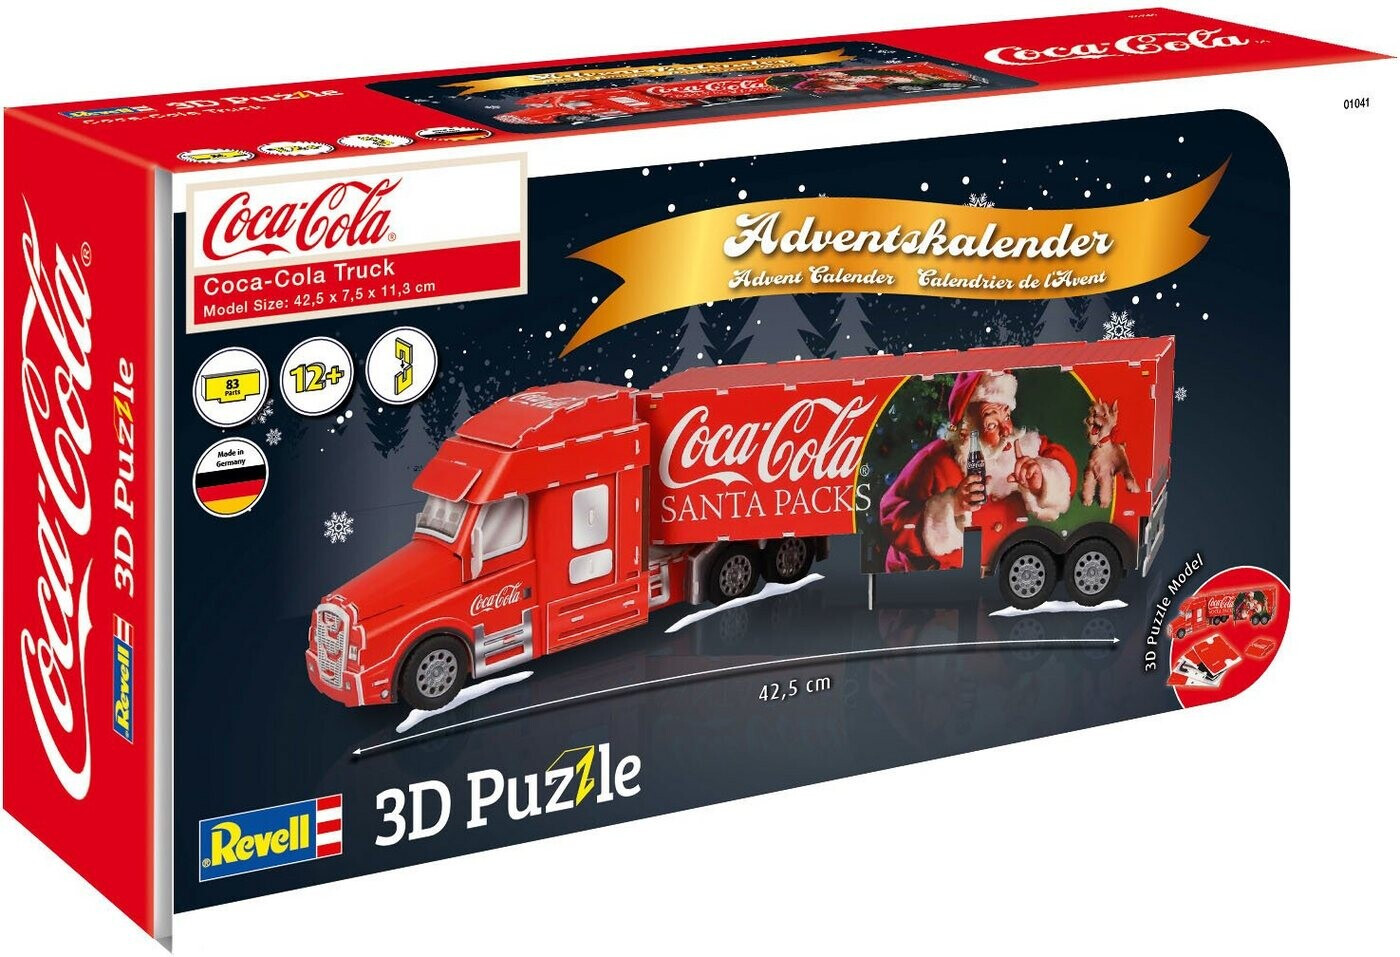 Revell Adventskalender 3D Puzzle Coca-Cola Truck (01041) ab 7,99